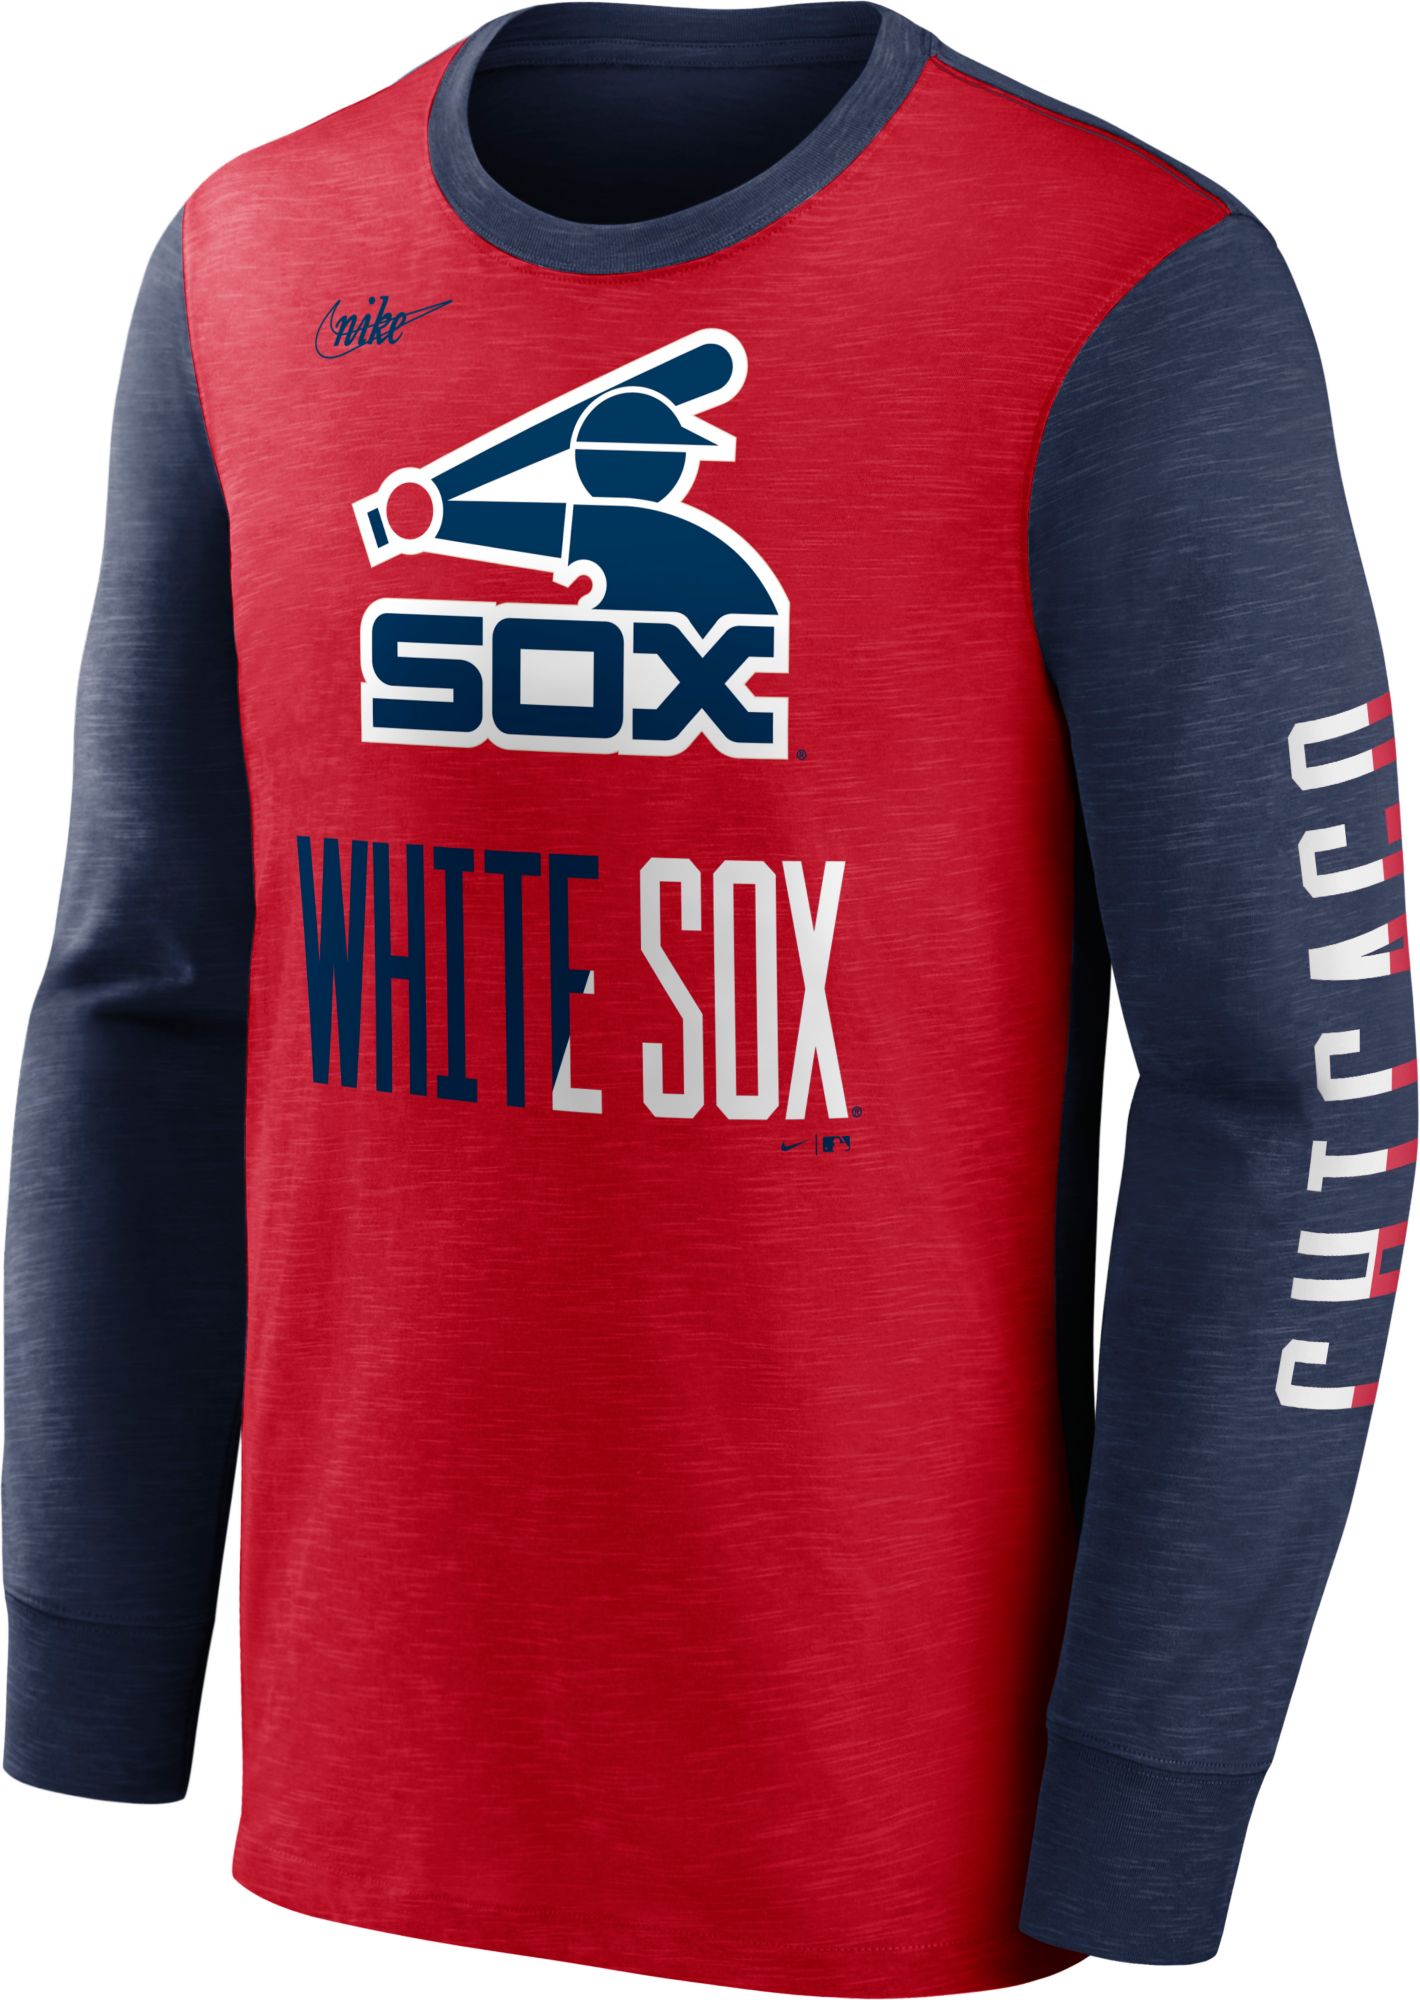 Nike Youth Boston Red Sox J.D Martinez #28 Navy T-Shirt